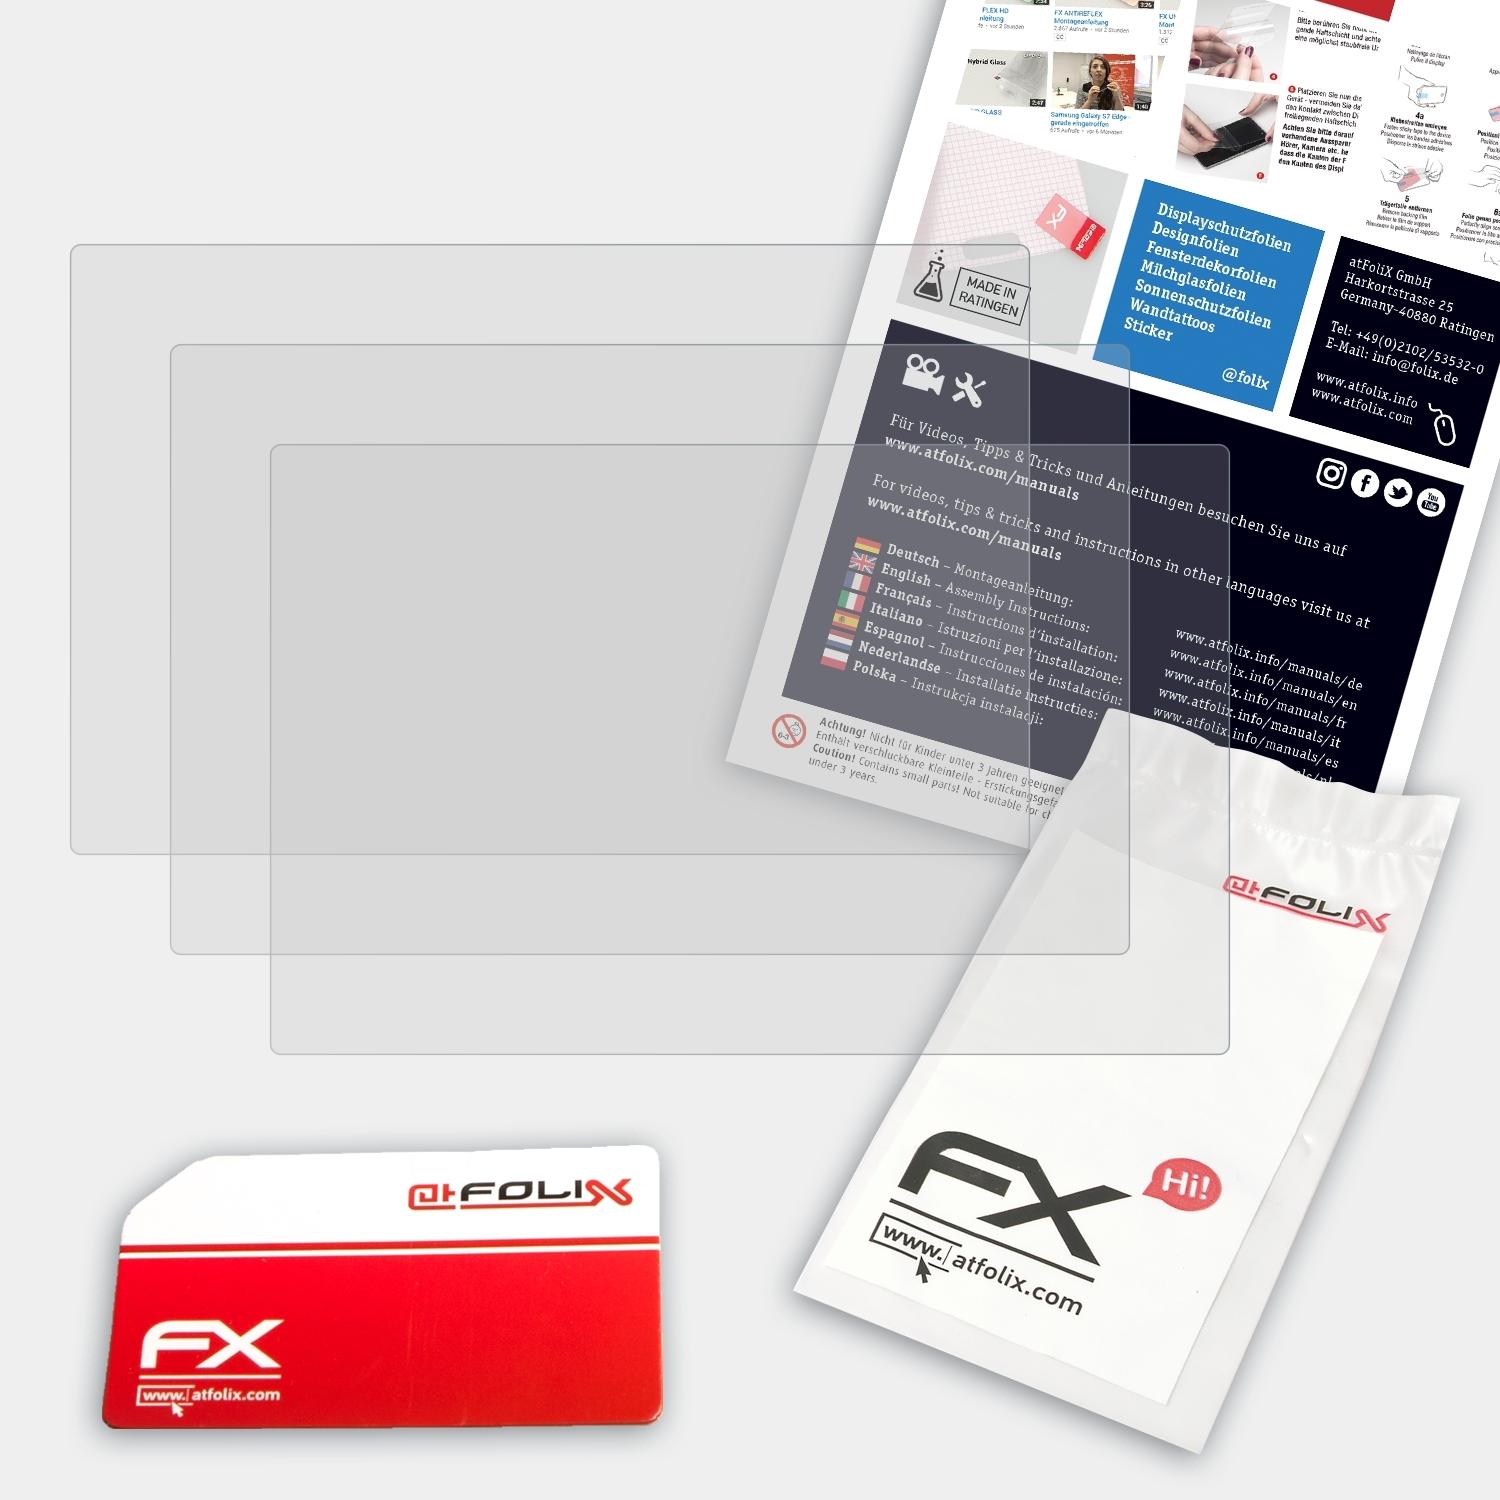 ATFOLIX Socialmatic) FX-Antireflex 3x Displayschutz(für Polaroid